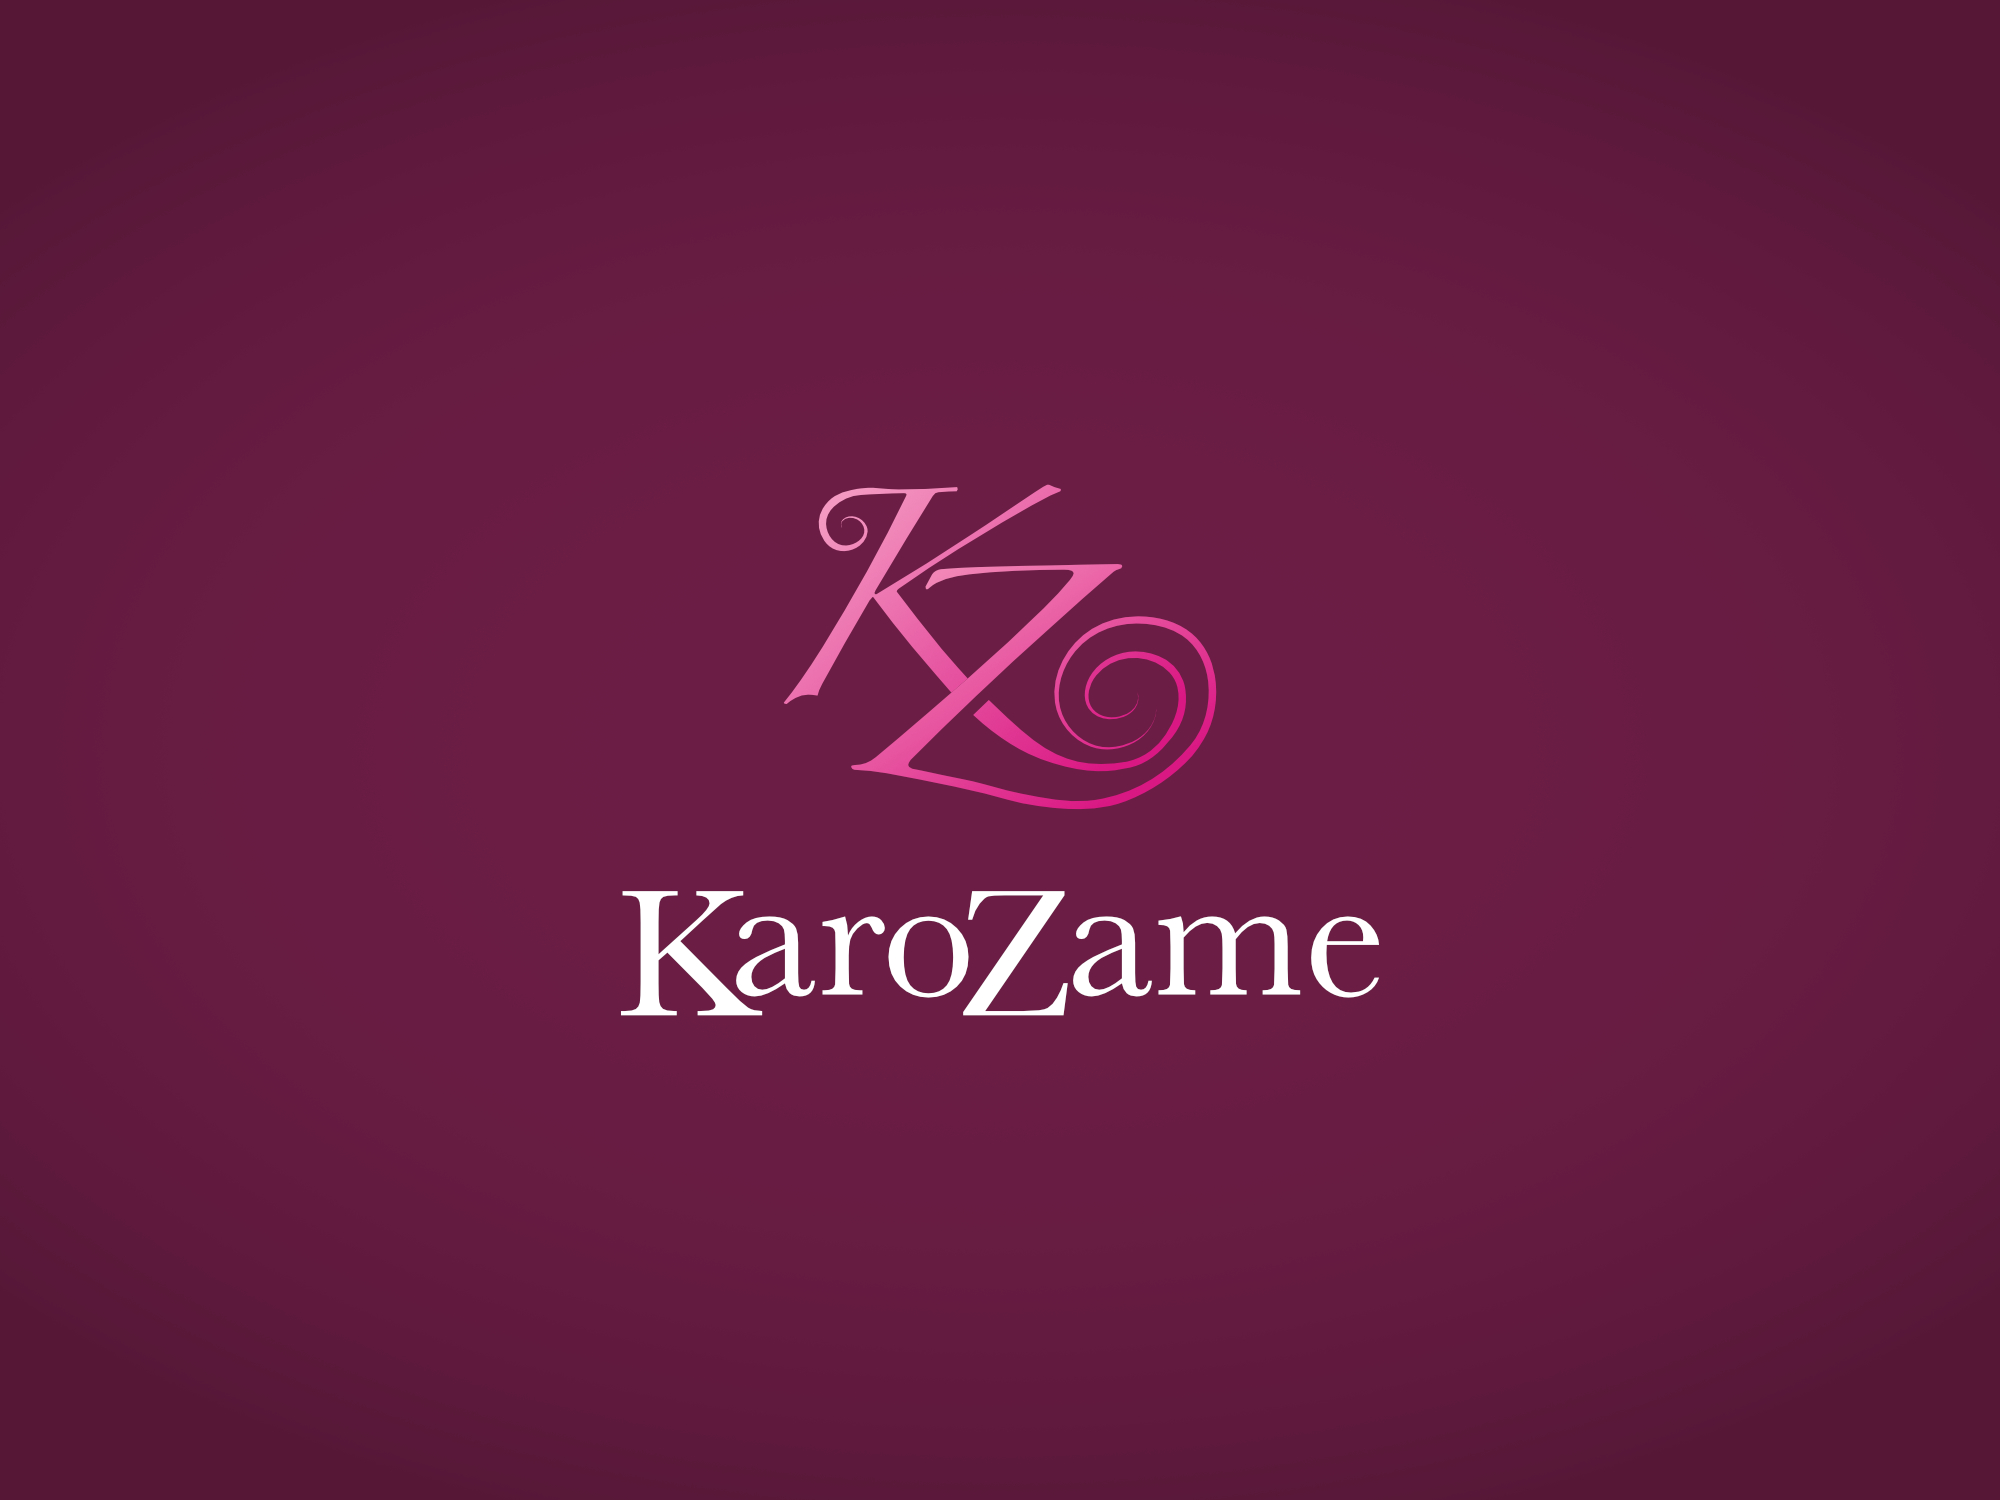 KaroZame Brand